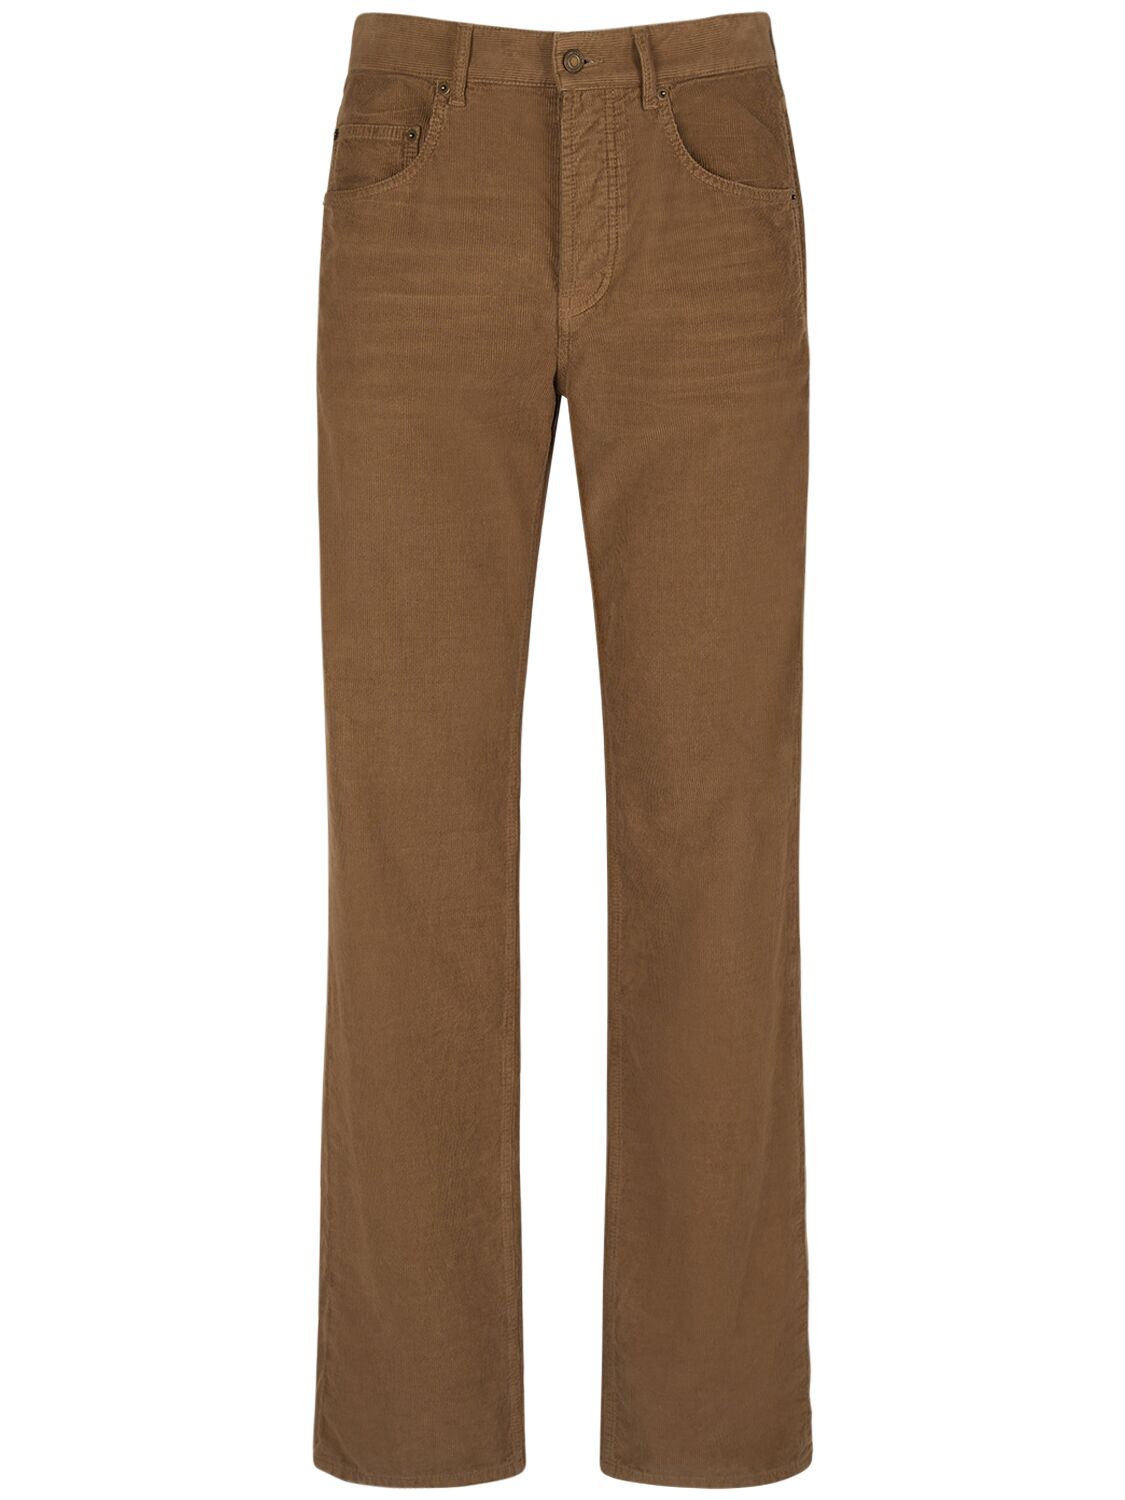 Maxi Cotton Soft Corduroy Long Pants